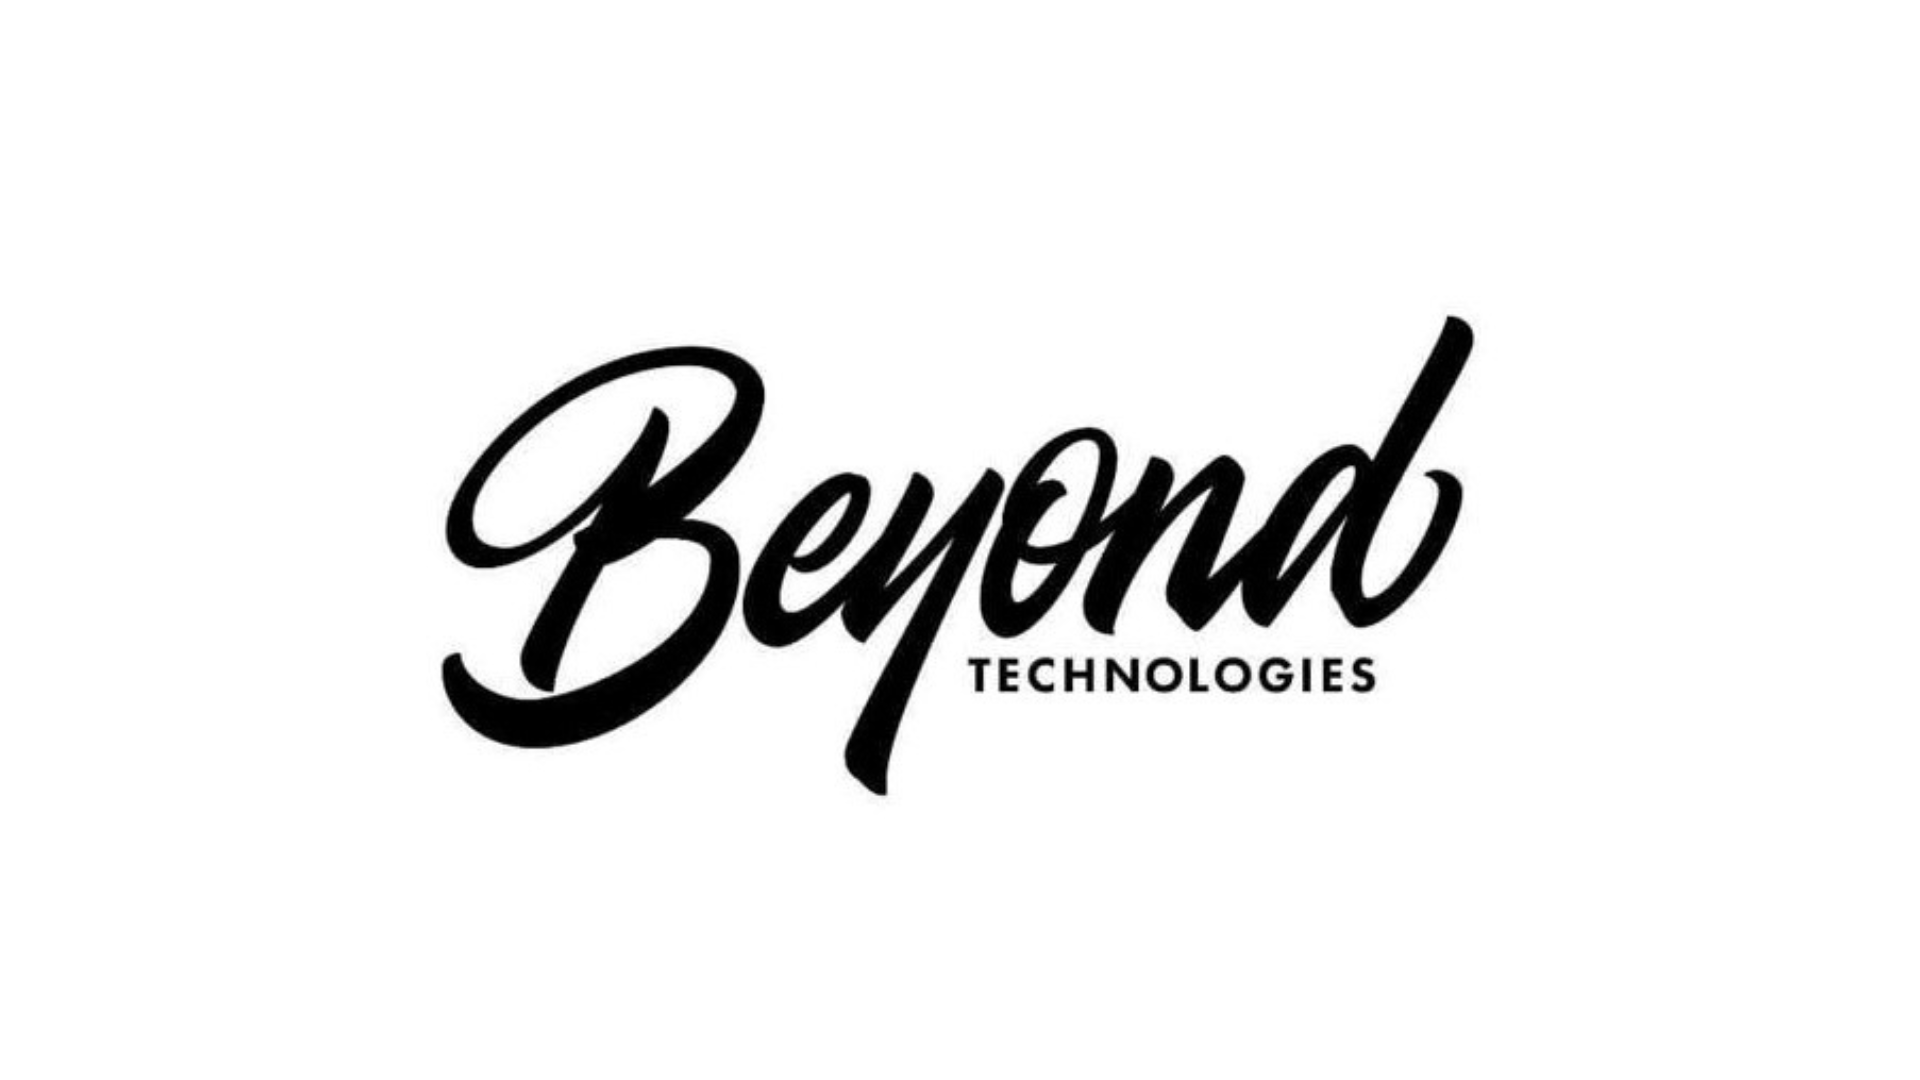 Beyond Technologies株式会社